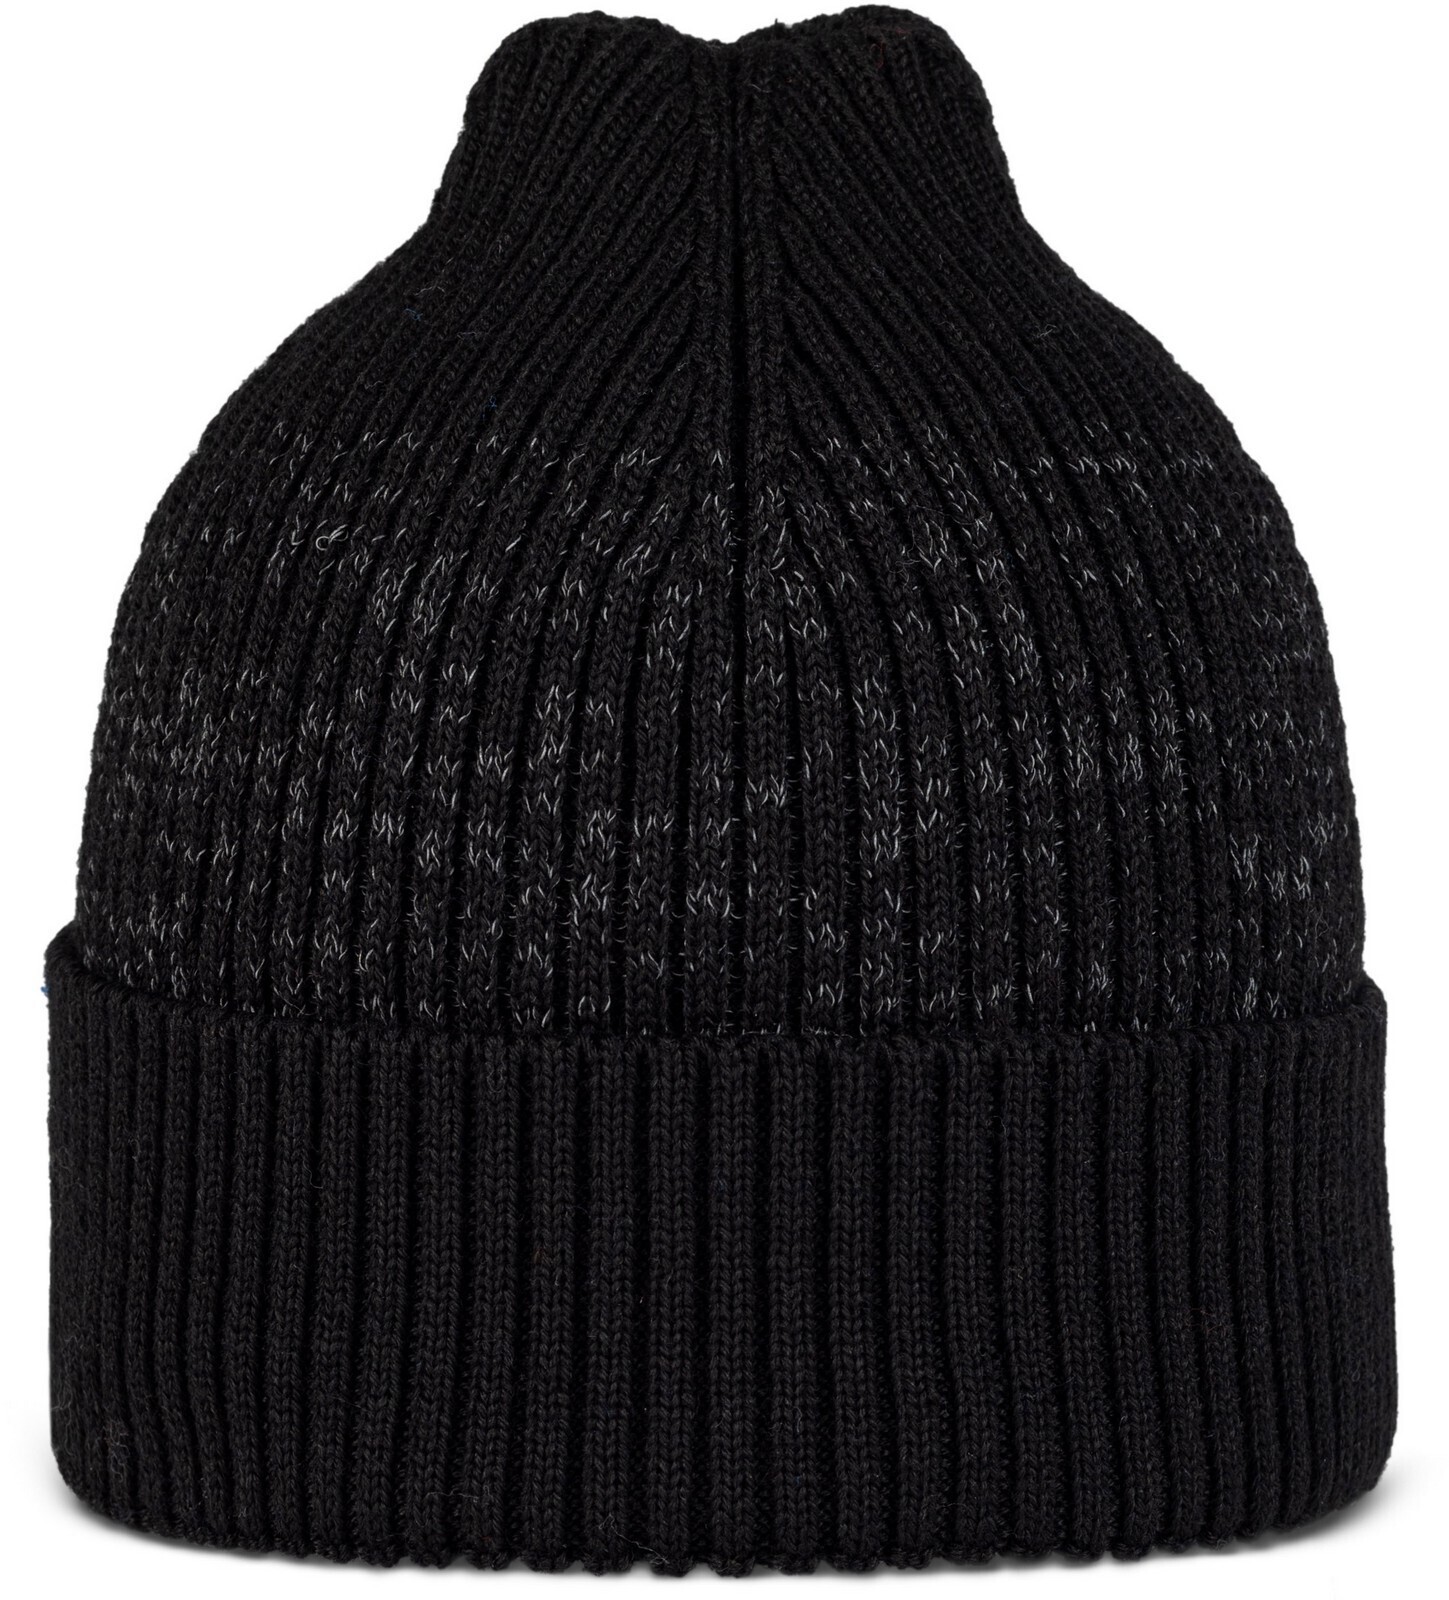 Шапка бини унисекс Buff Merino Active Hat solid black, р.53-62